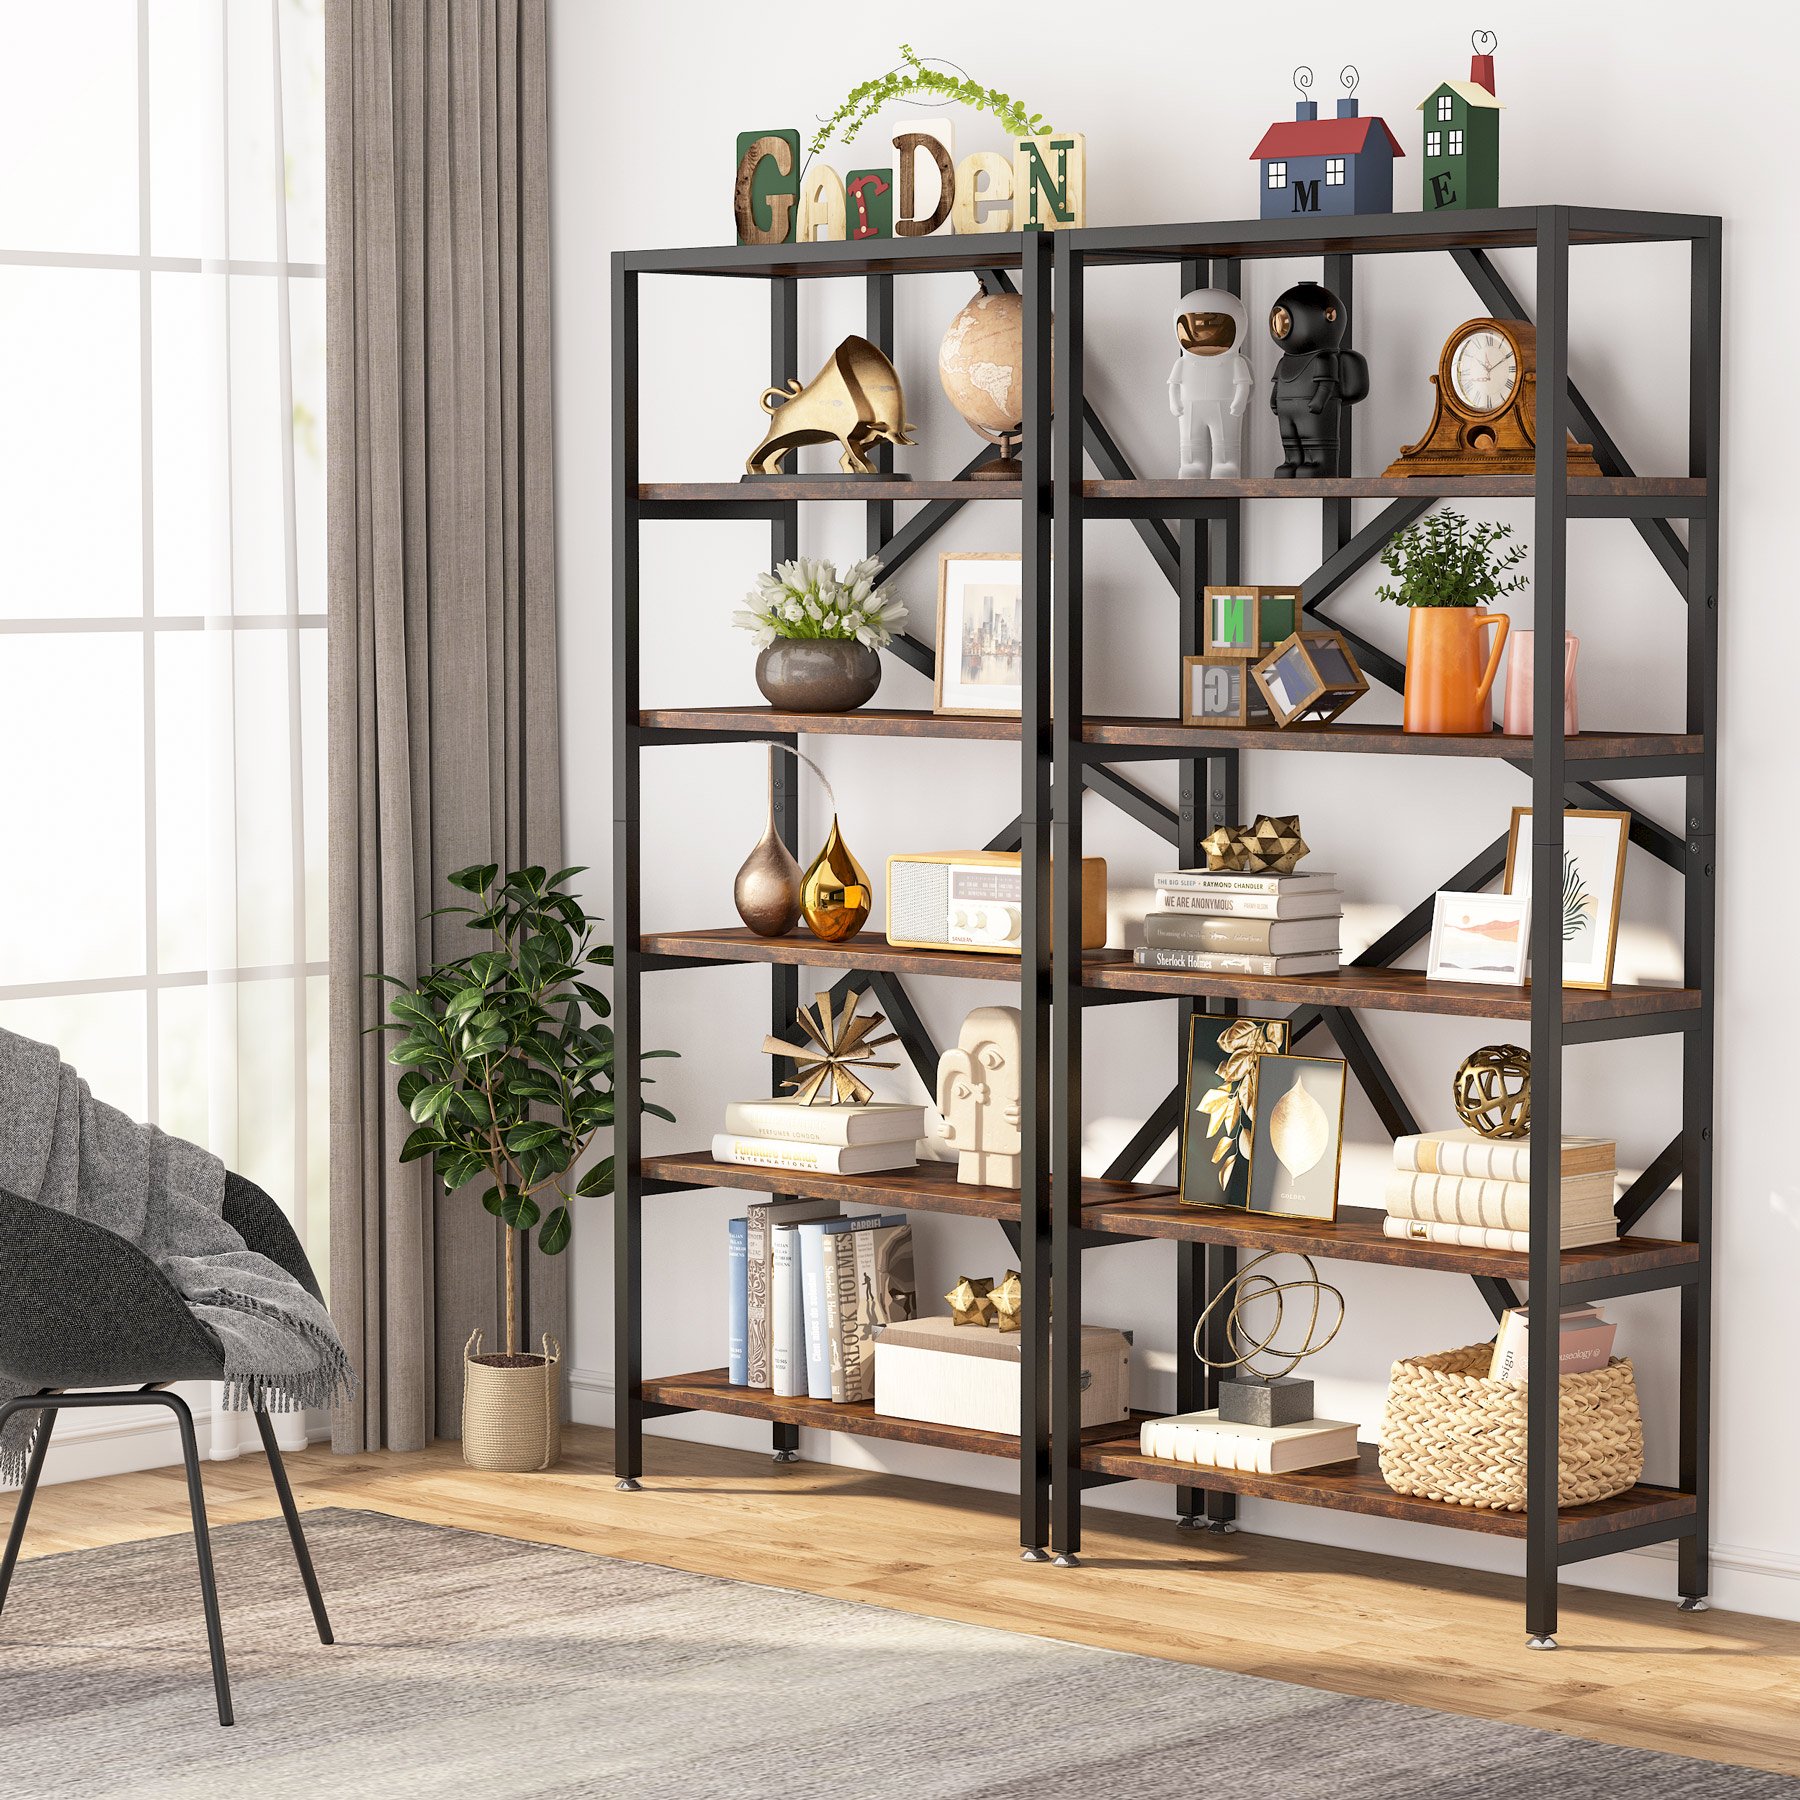 71 Industrial Bookshelf Free Standing Open Book Shelves Storage Display Shelf Wood Shelving Units Organizer Rack